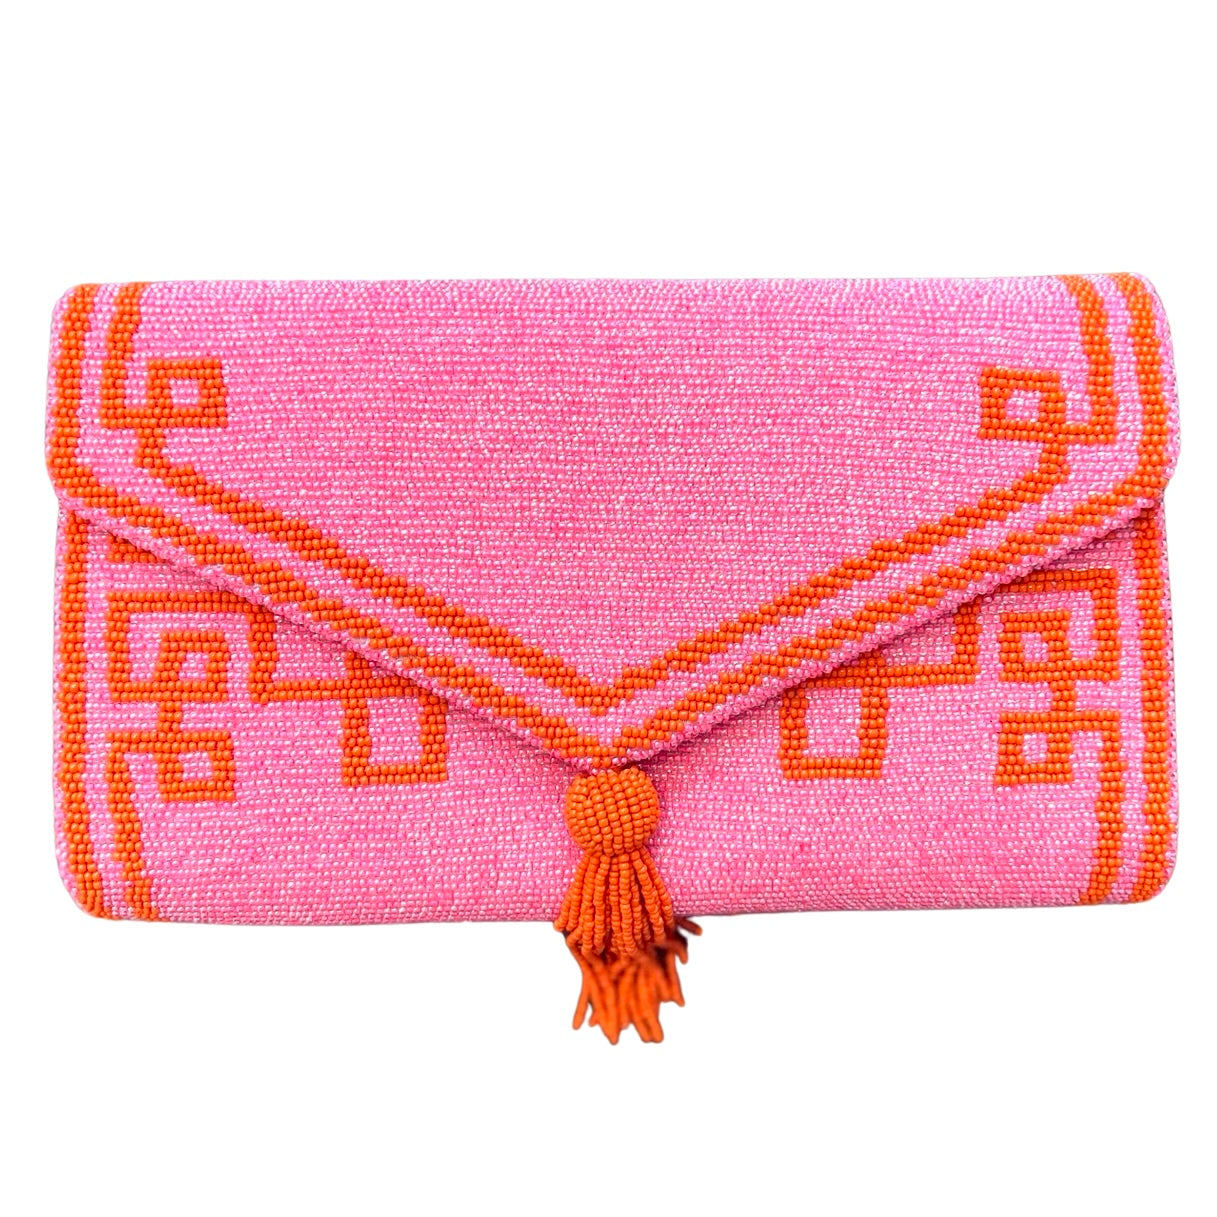 Pink/Orange Beaded Envelope Clutch